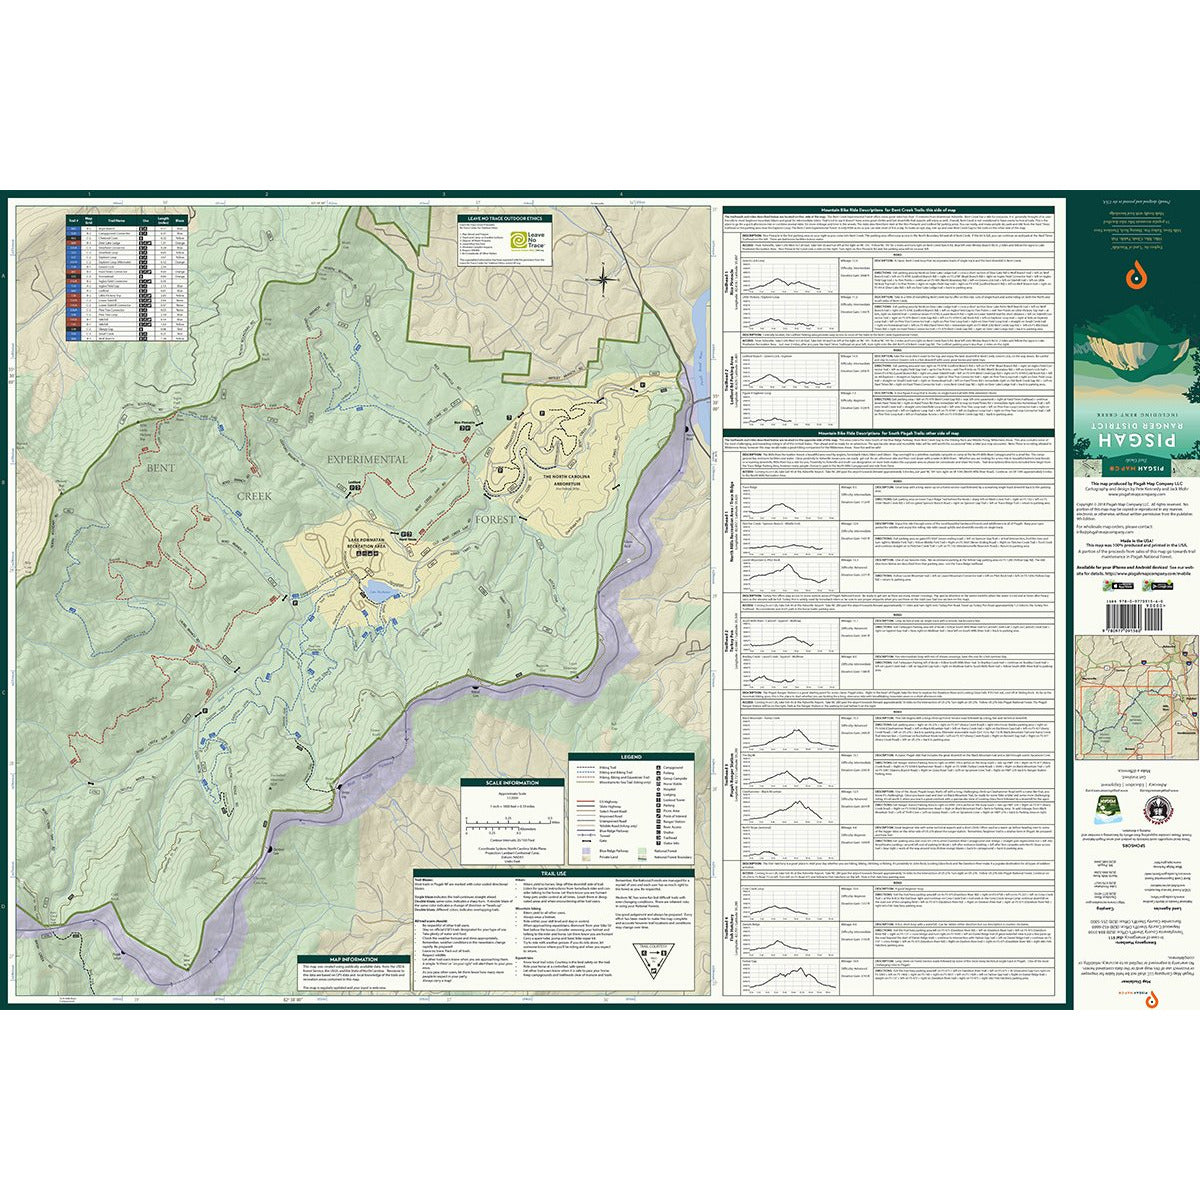 Pisgah Map Co. Pisgah Ranger District, Including Bent Creek